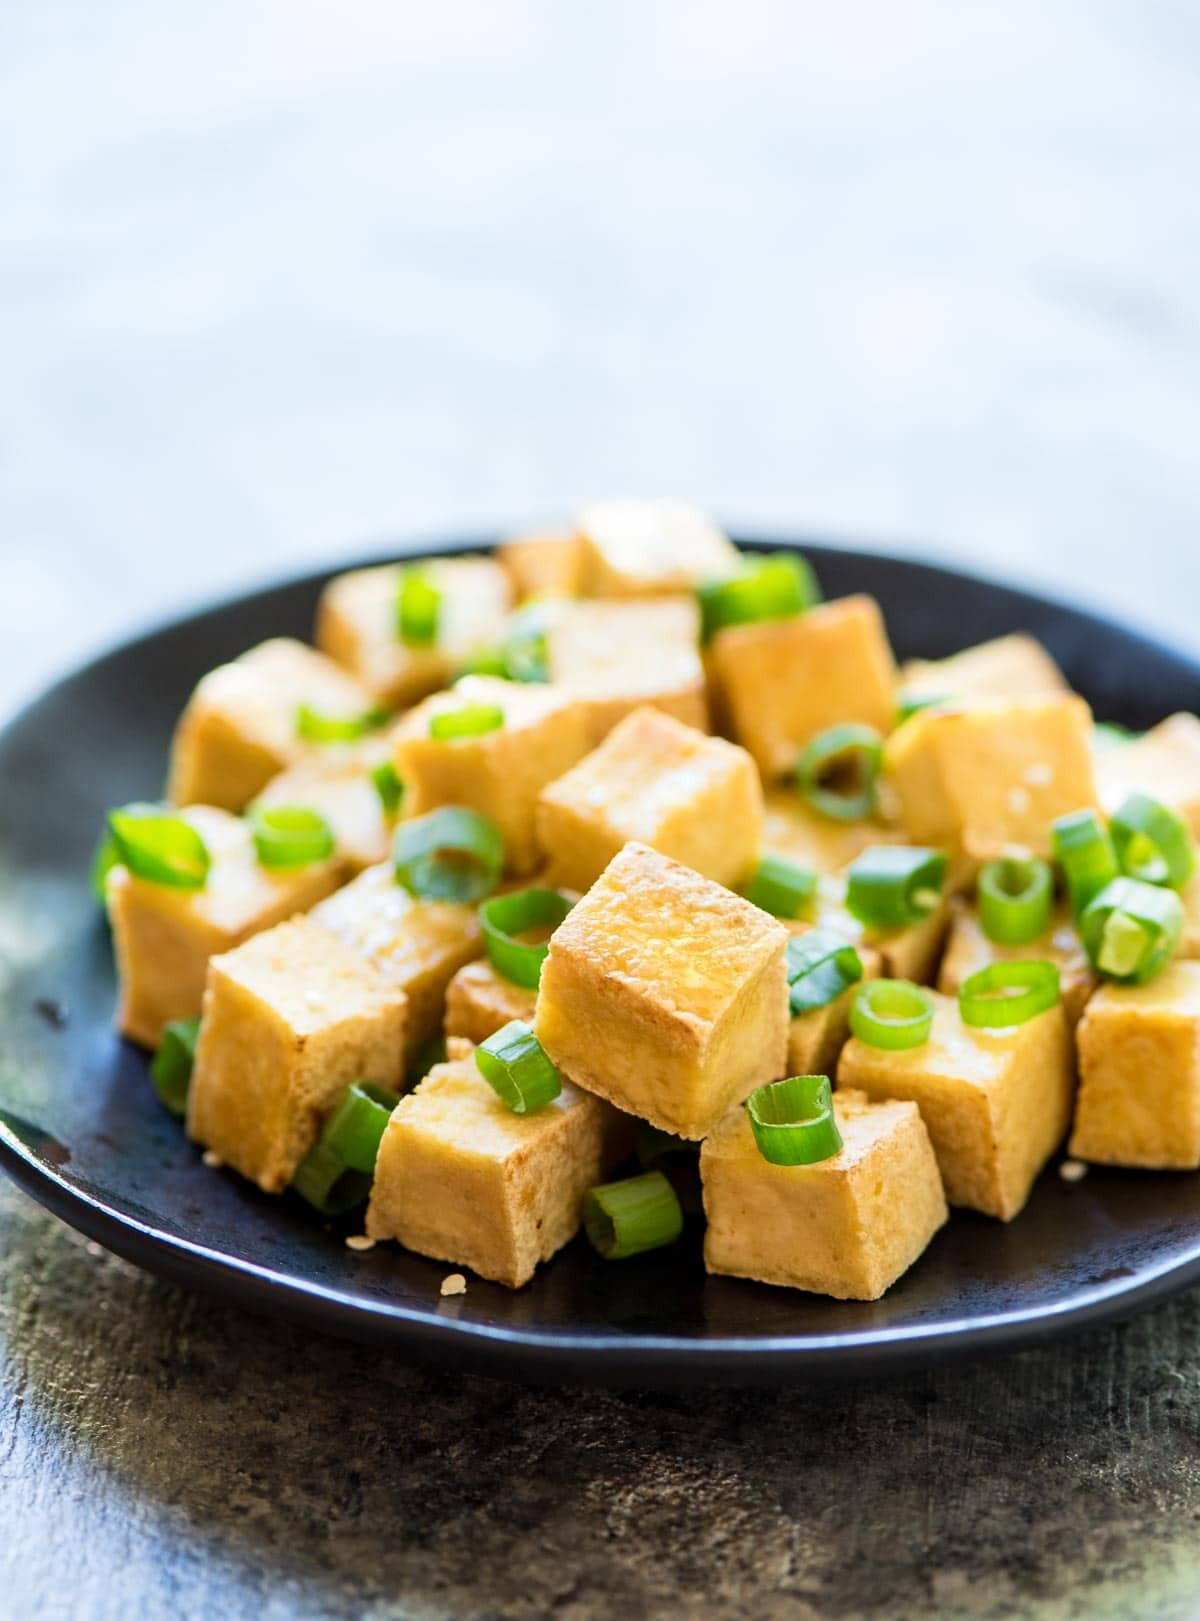 Recipes Using Tofu
 Crispy Tofu Perfect Every Time  WellPlated